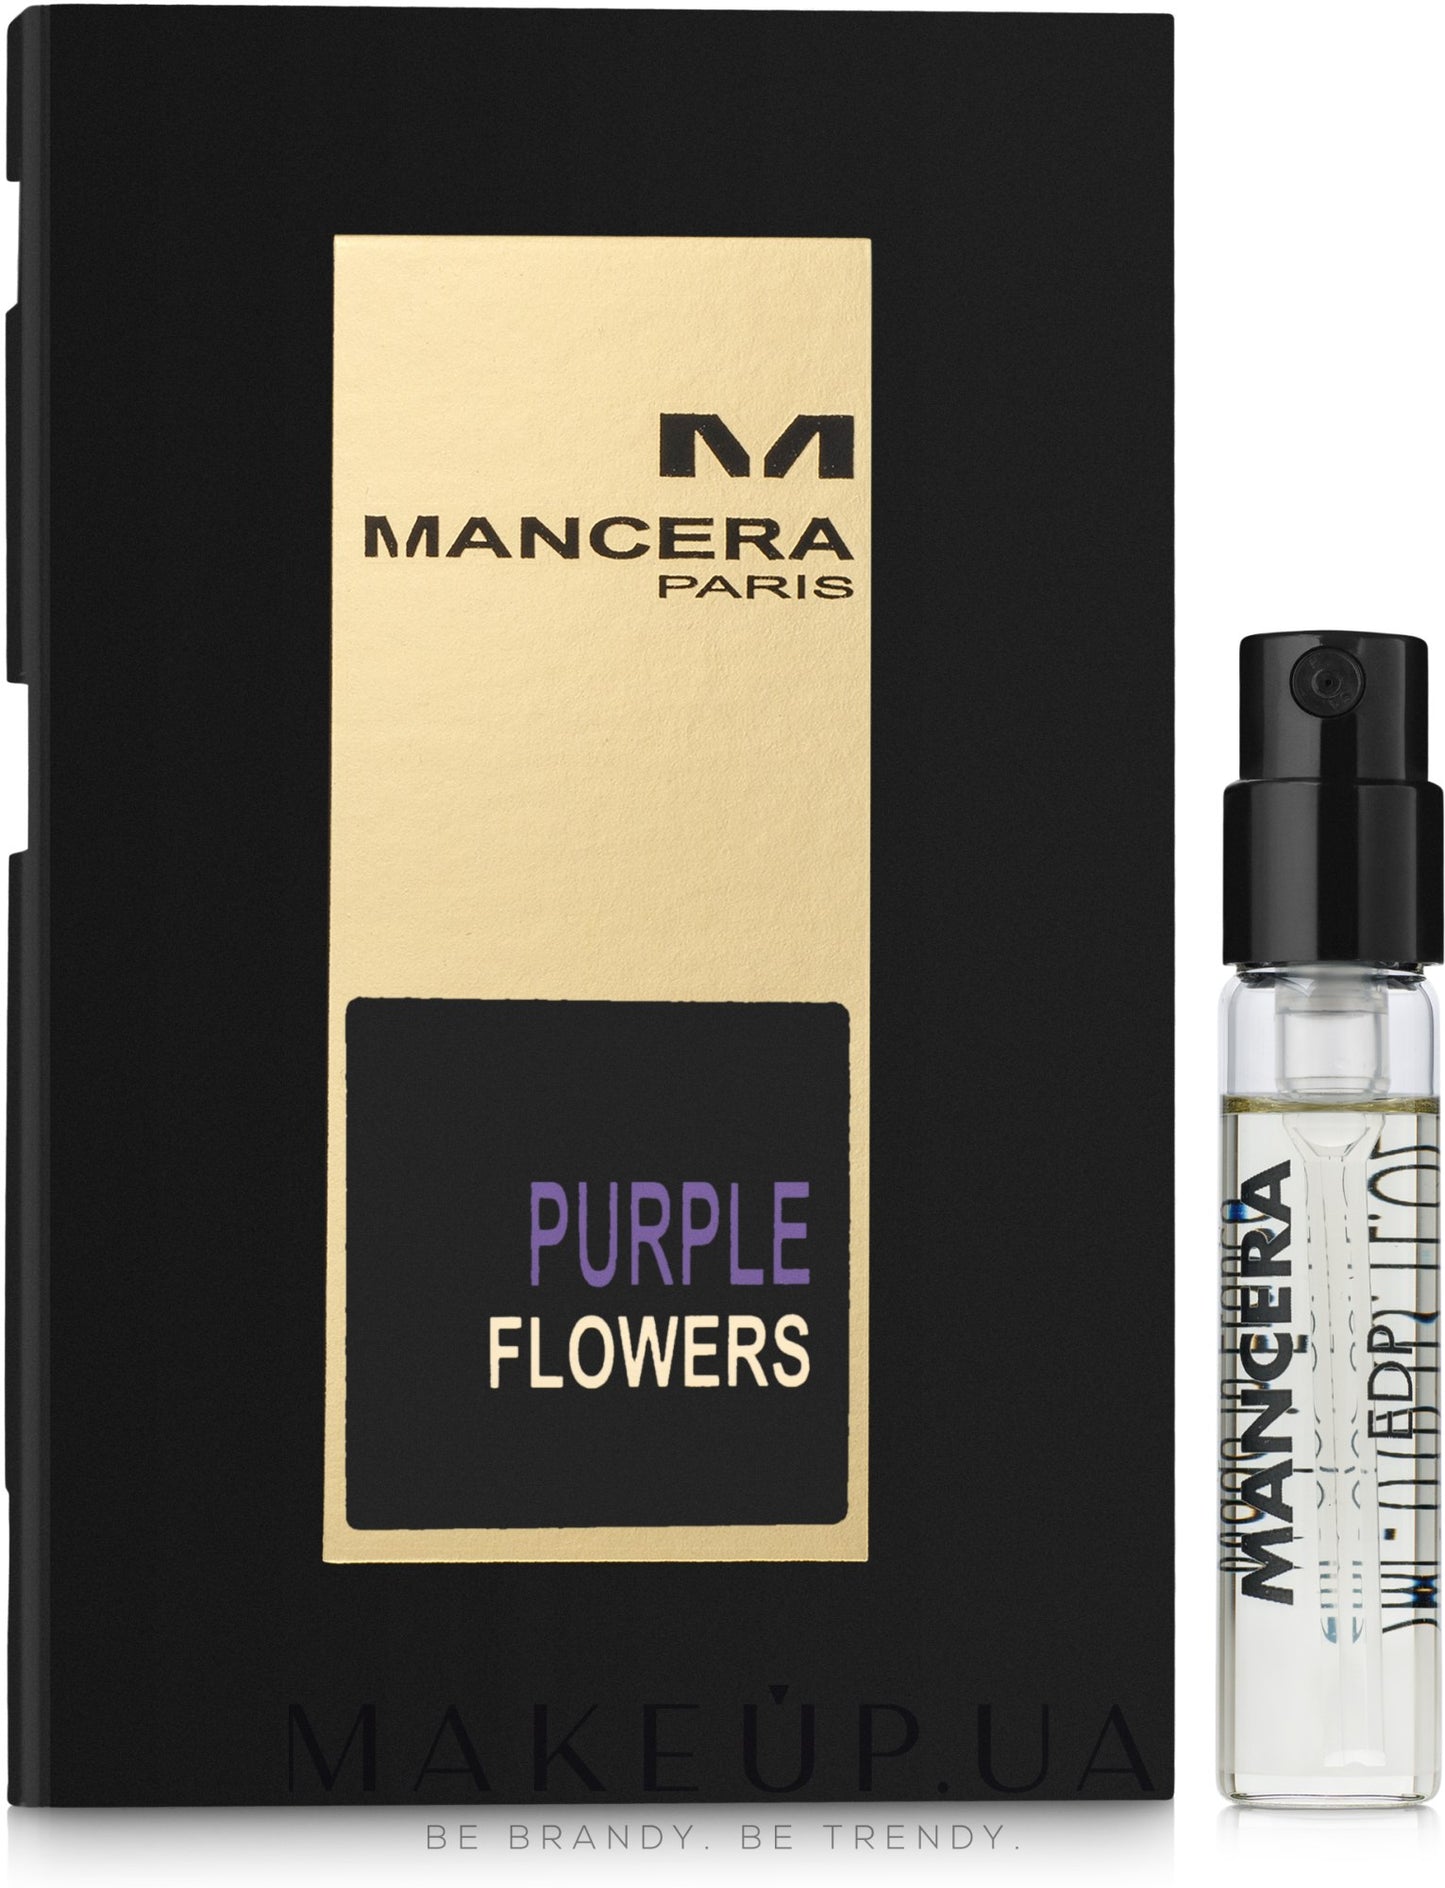 Mancera Purple Flowers amostra oficial 2ml 0.07 fl.oz